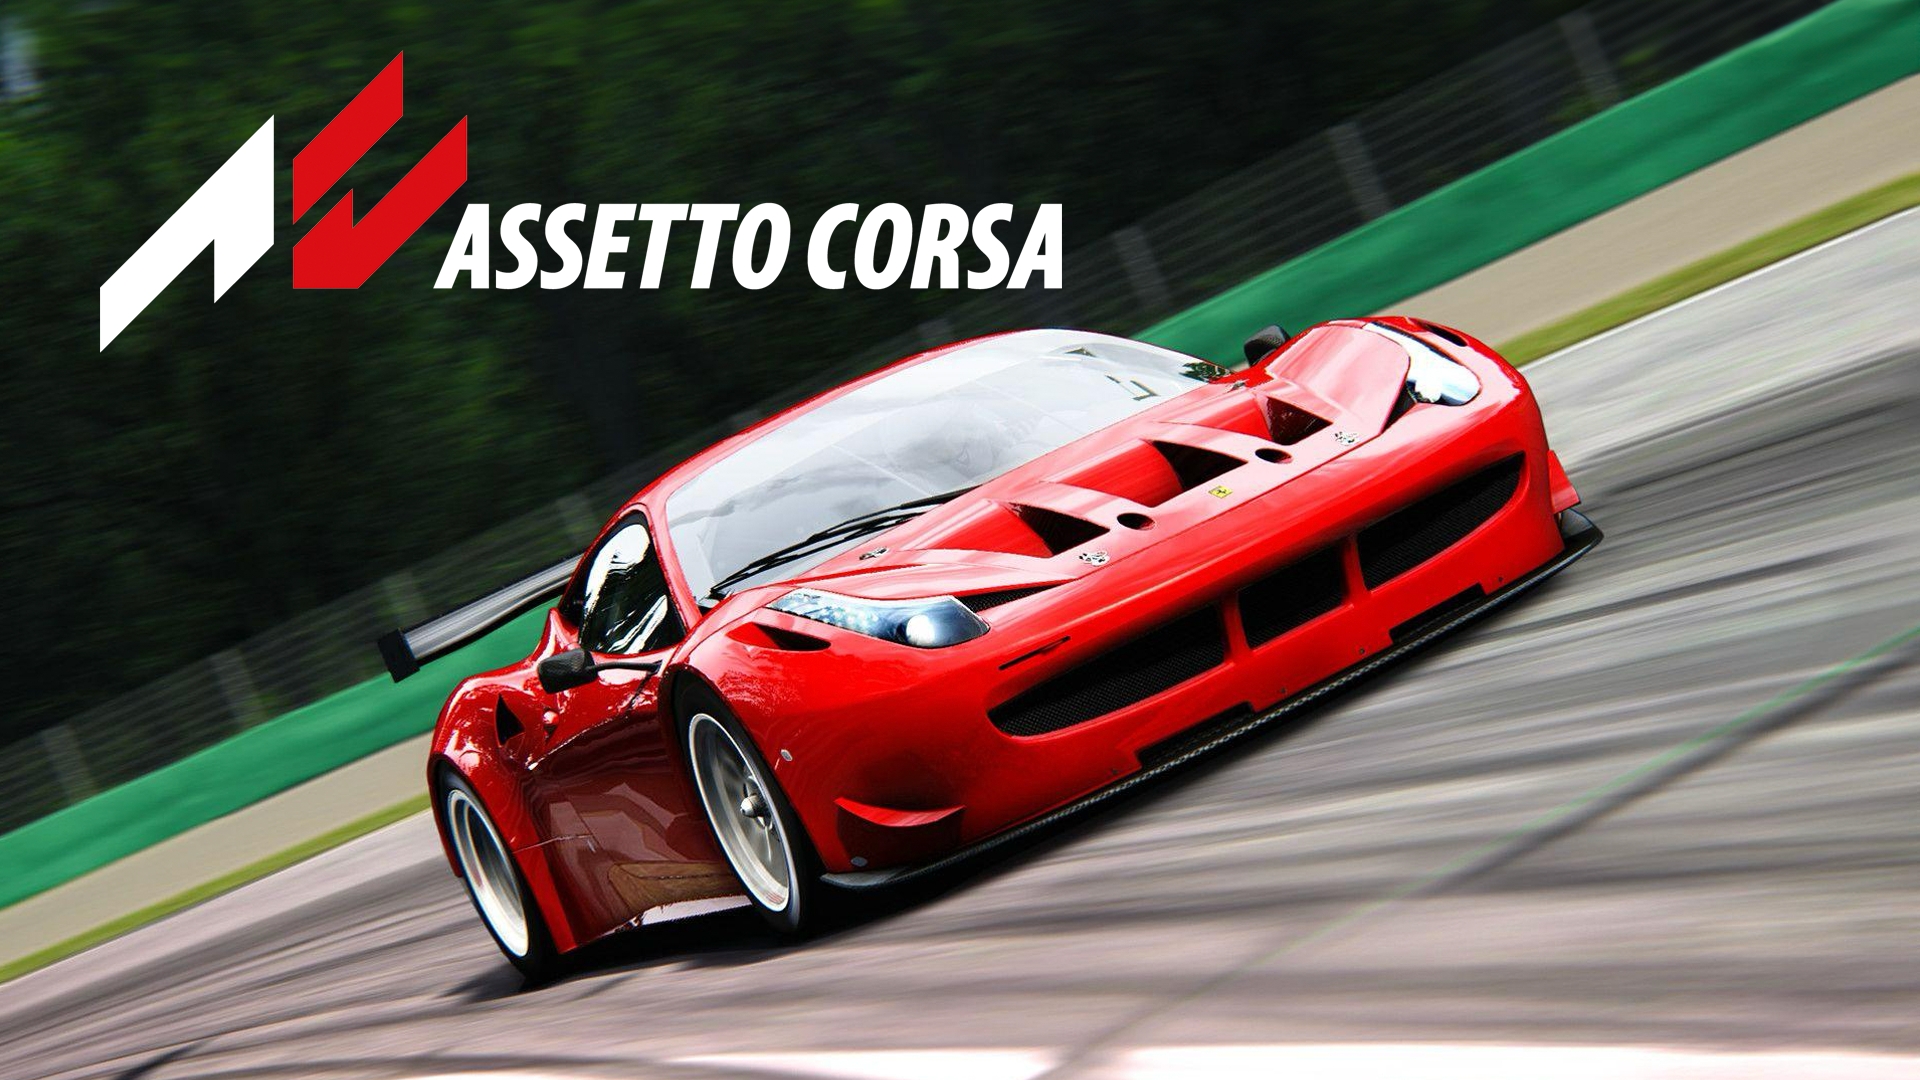 Assetto Corsa Xbox One [Digital] G3Q-01399 - Best Buy